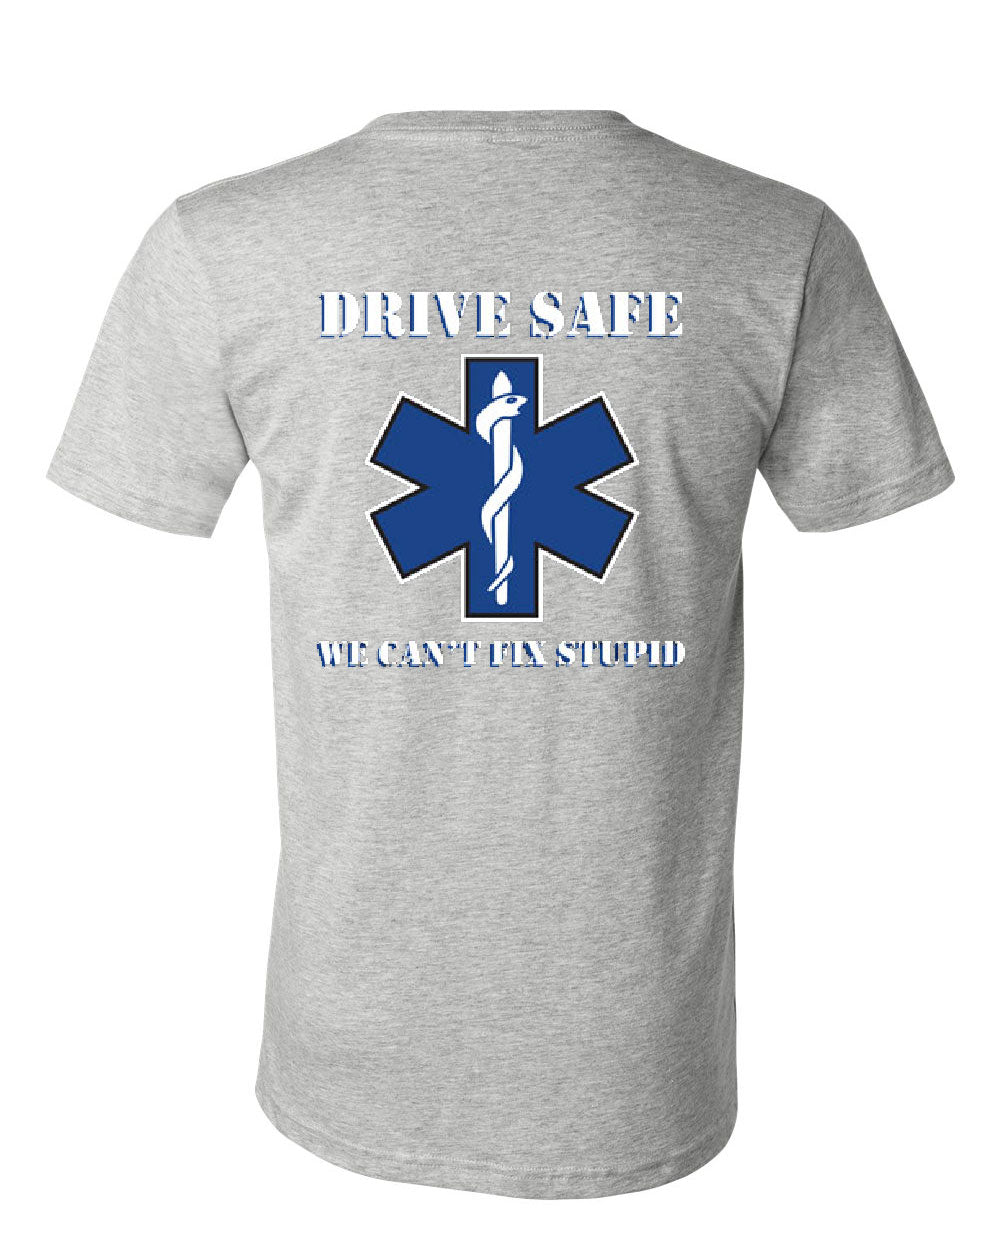 EMS V-Neck T-Shirt Drive Safe We Can't Fix Stupid Ambulance Tee | eBay